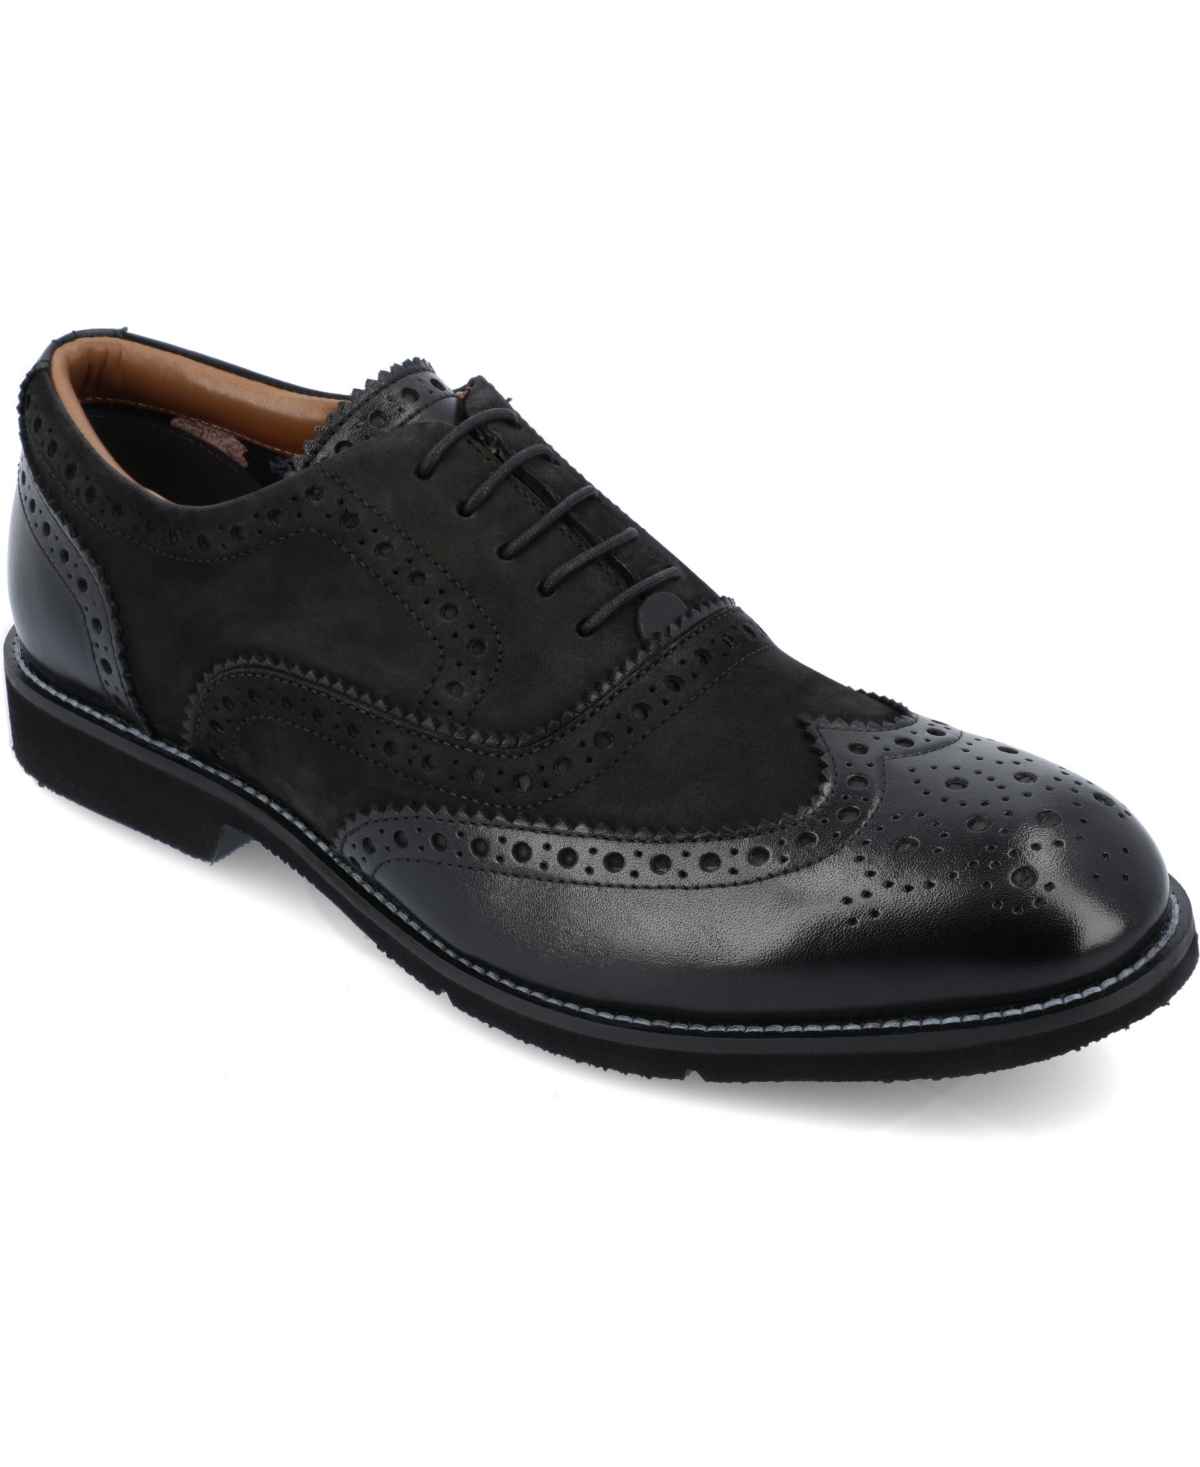 Men's Covington Tru Comfort Foam Wingtip Oxford Dress Shoes - Navy